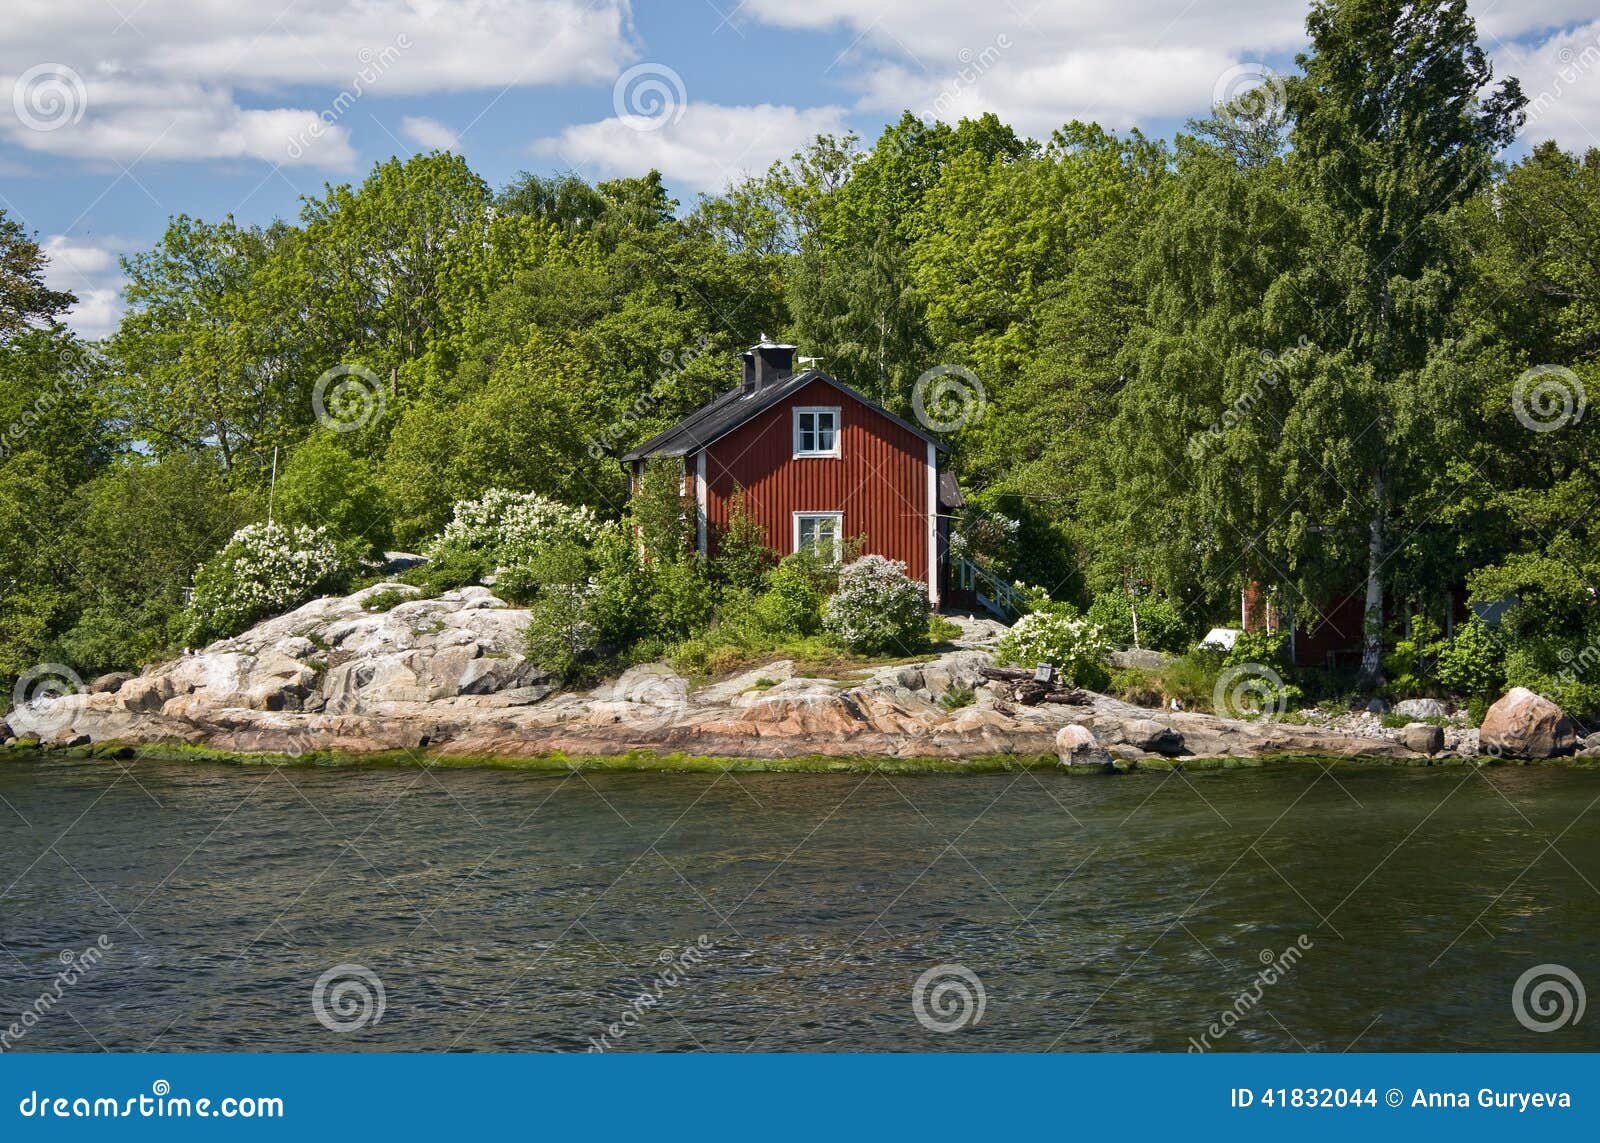 stockholm archipelago, summer house